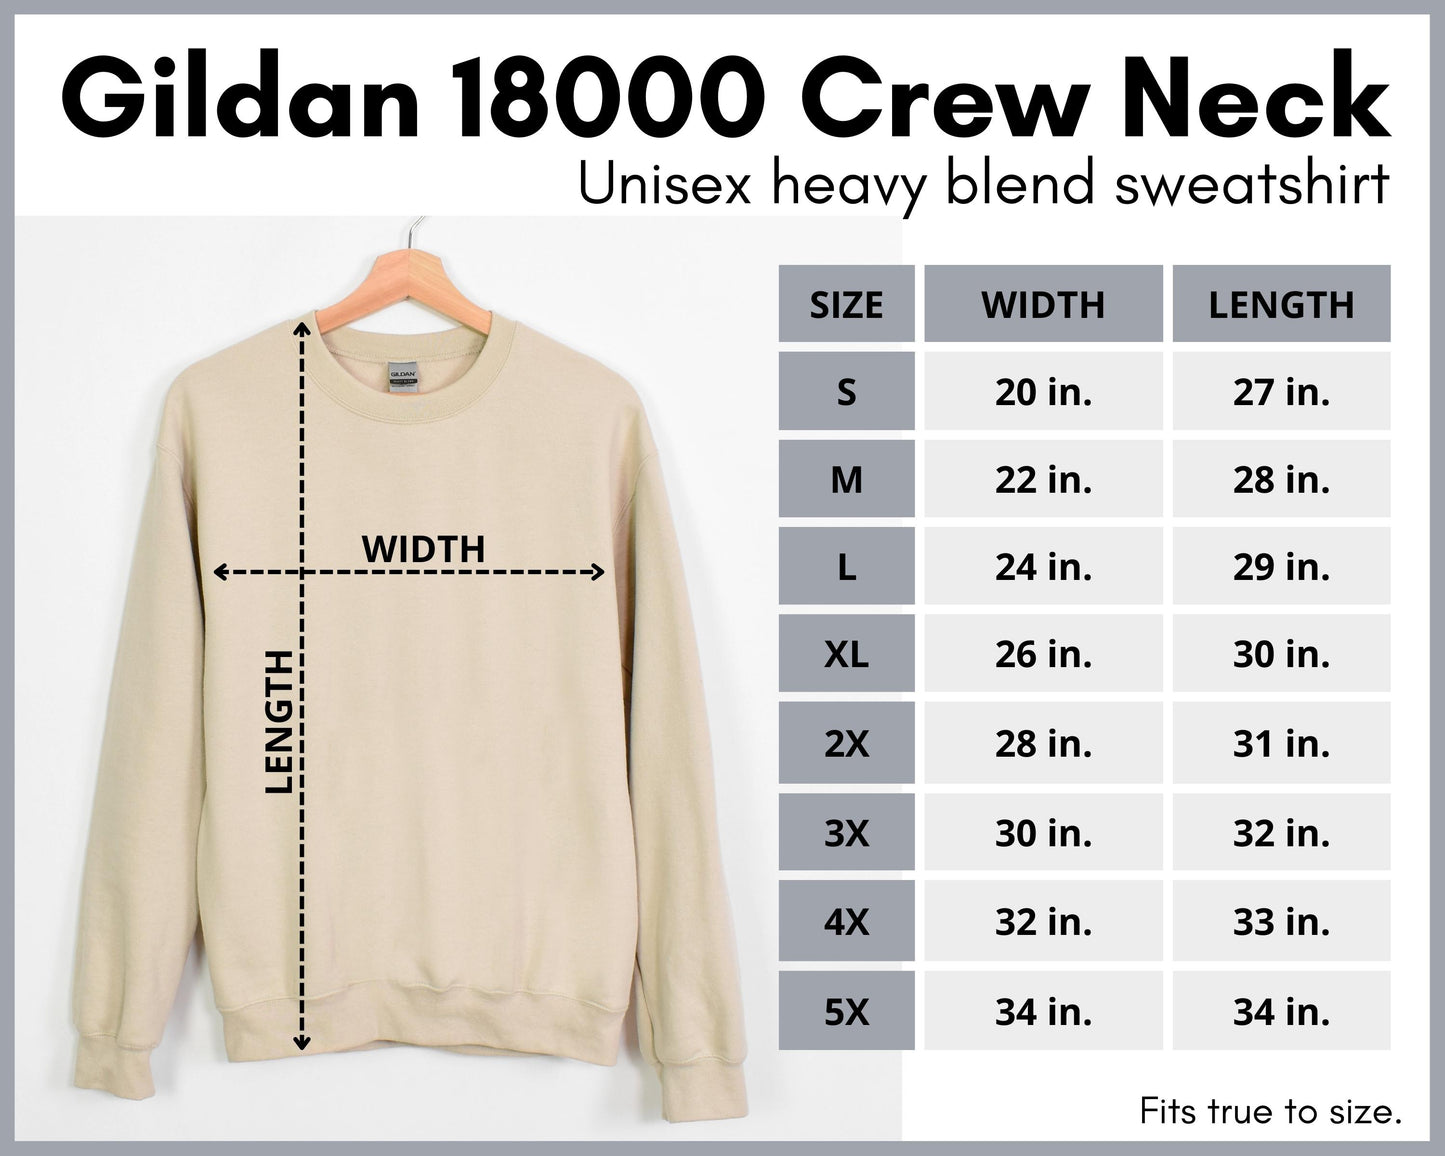 Embroidered Crescent City Unisex Sweatshirt